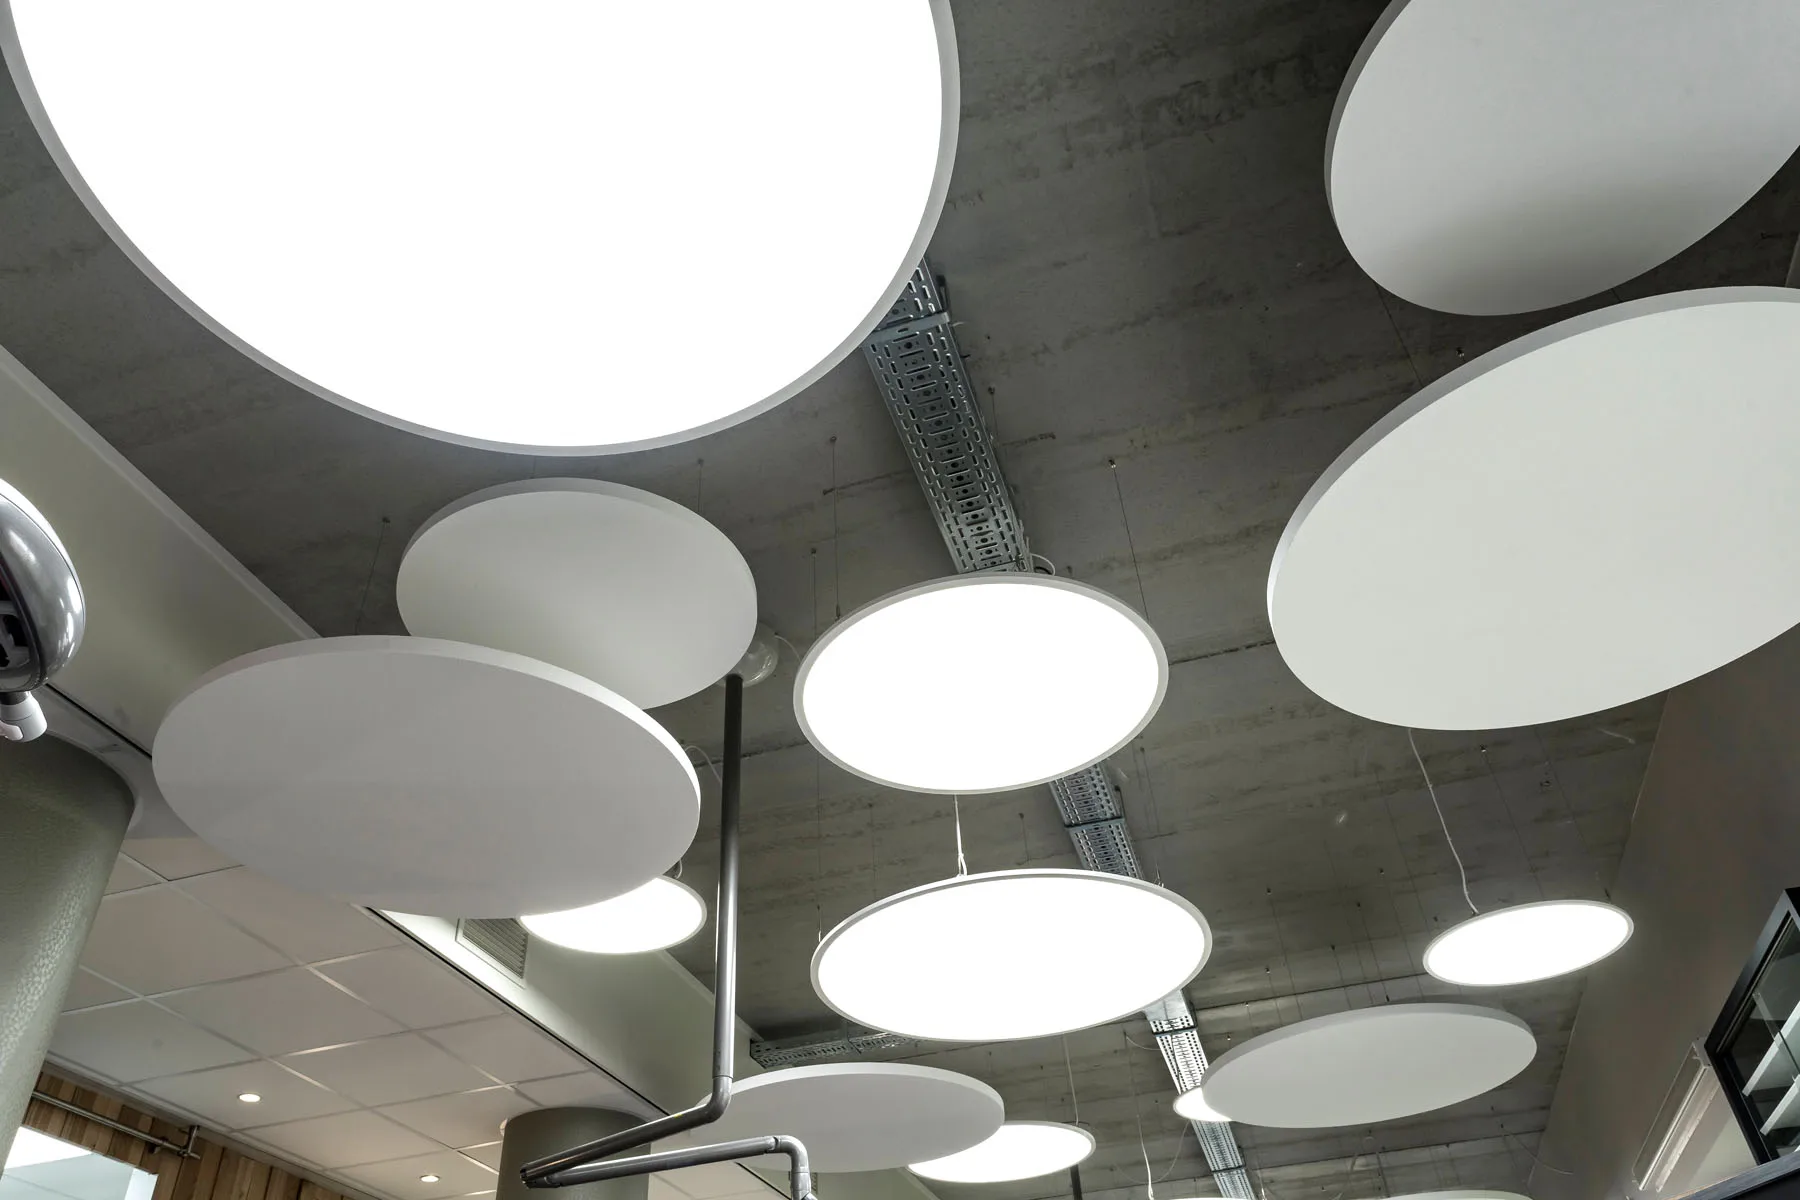 Large LED Round Panel Dia 1000mm Ceiling Light